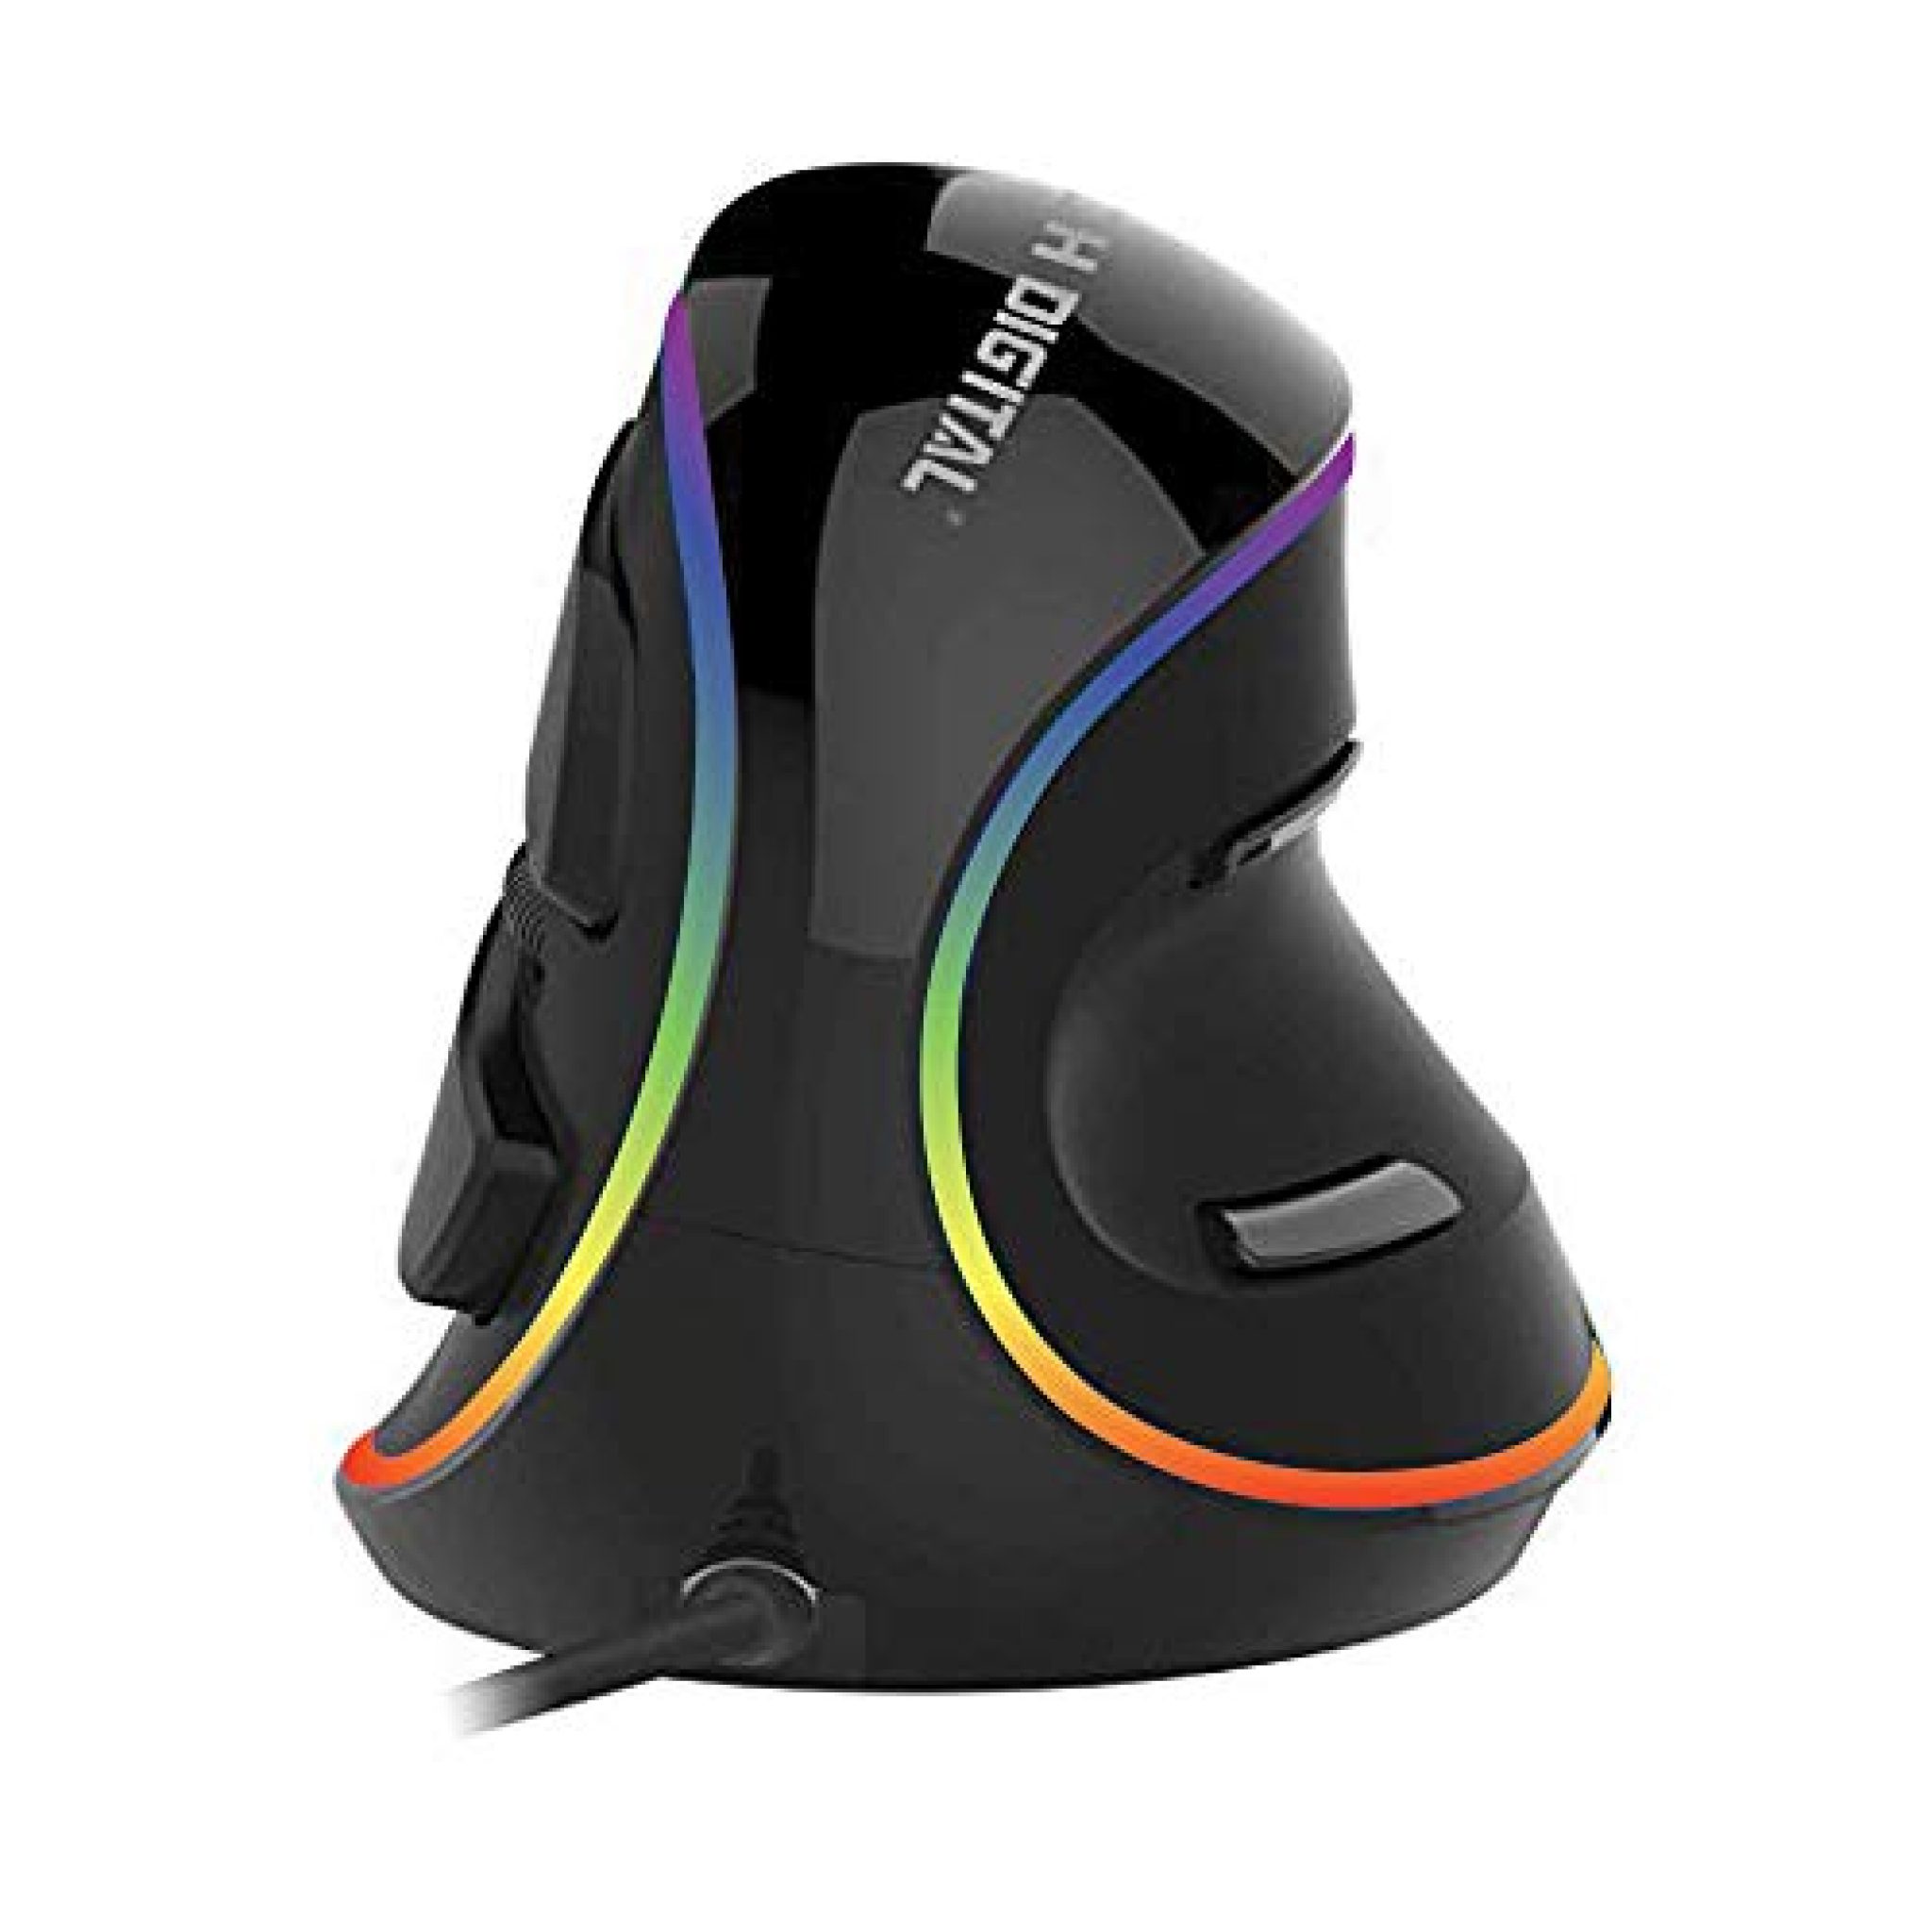 Vertical Mouse - J-Tech Digital Ergonomic LED Gaming Mouse - Yinz Buy